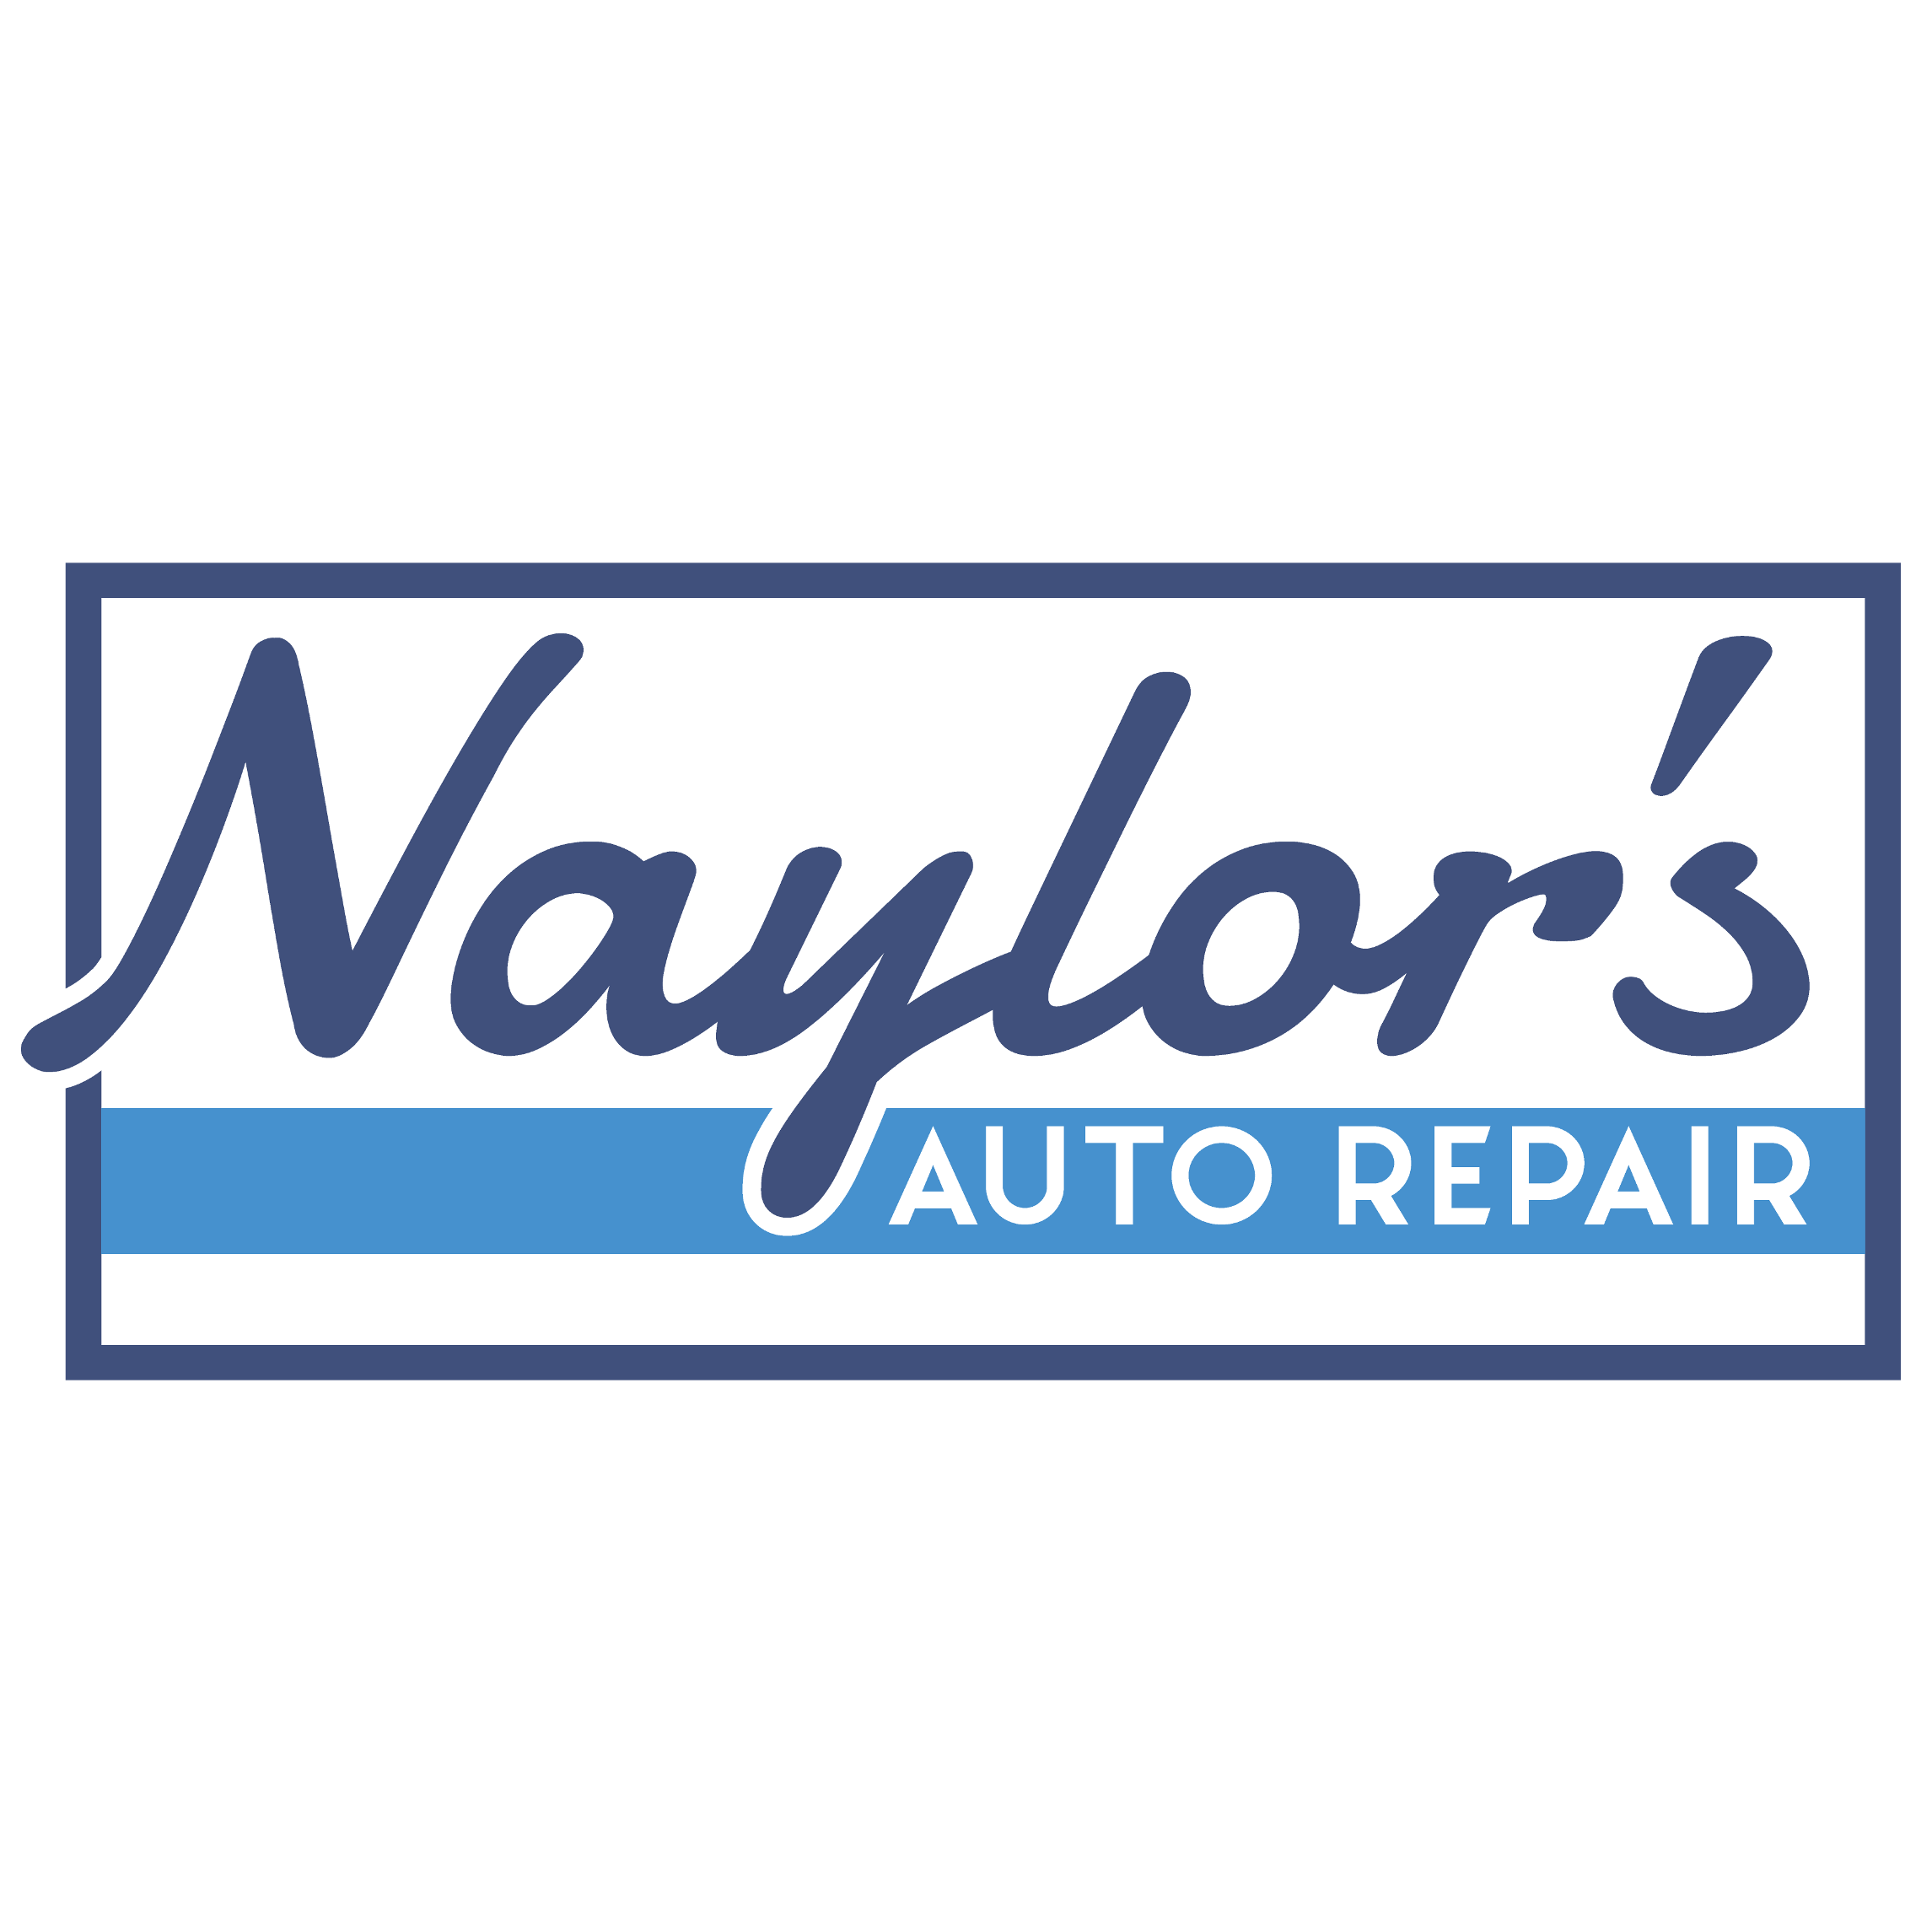 Naylor’s Auto Repair